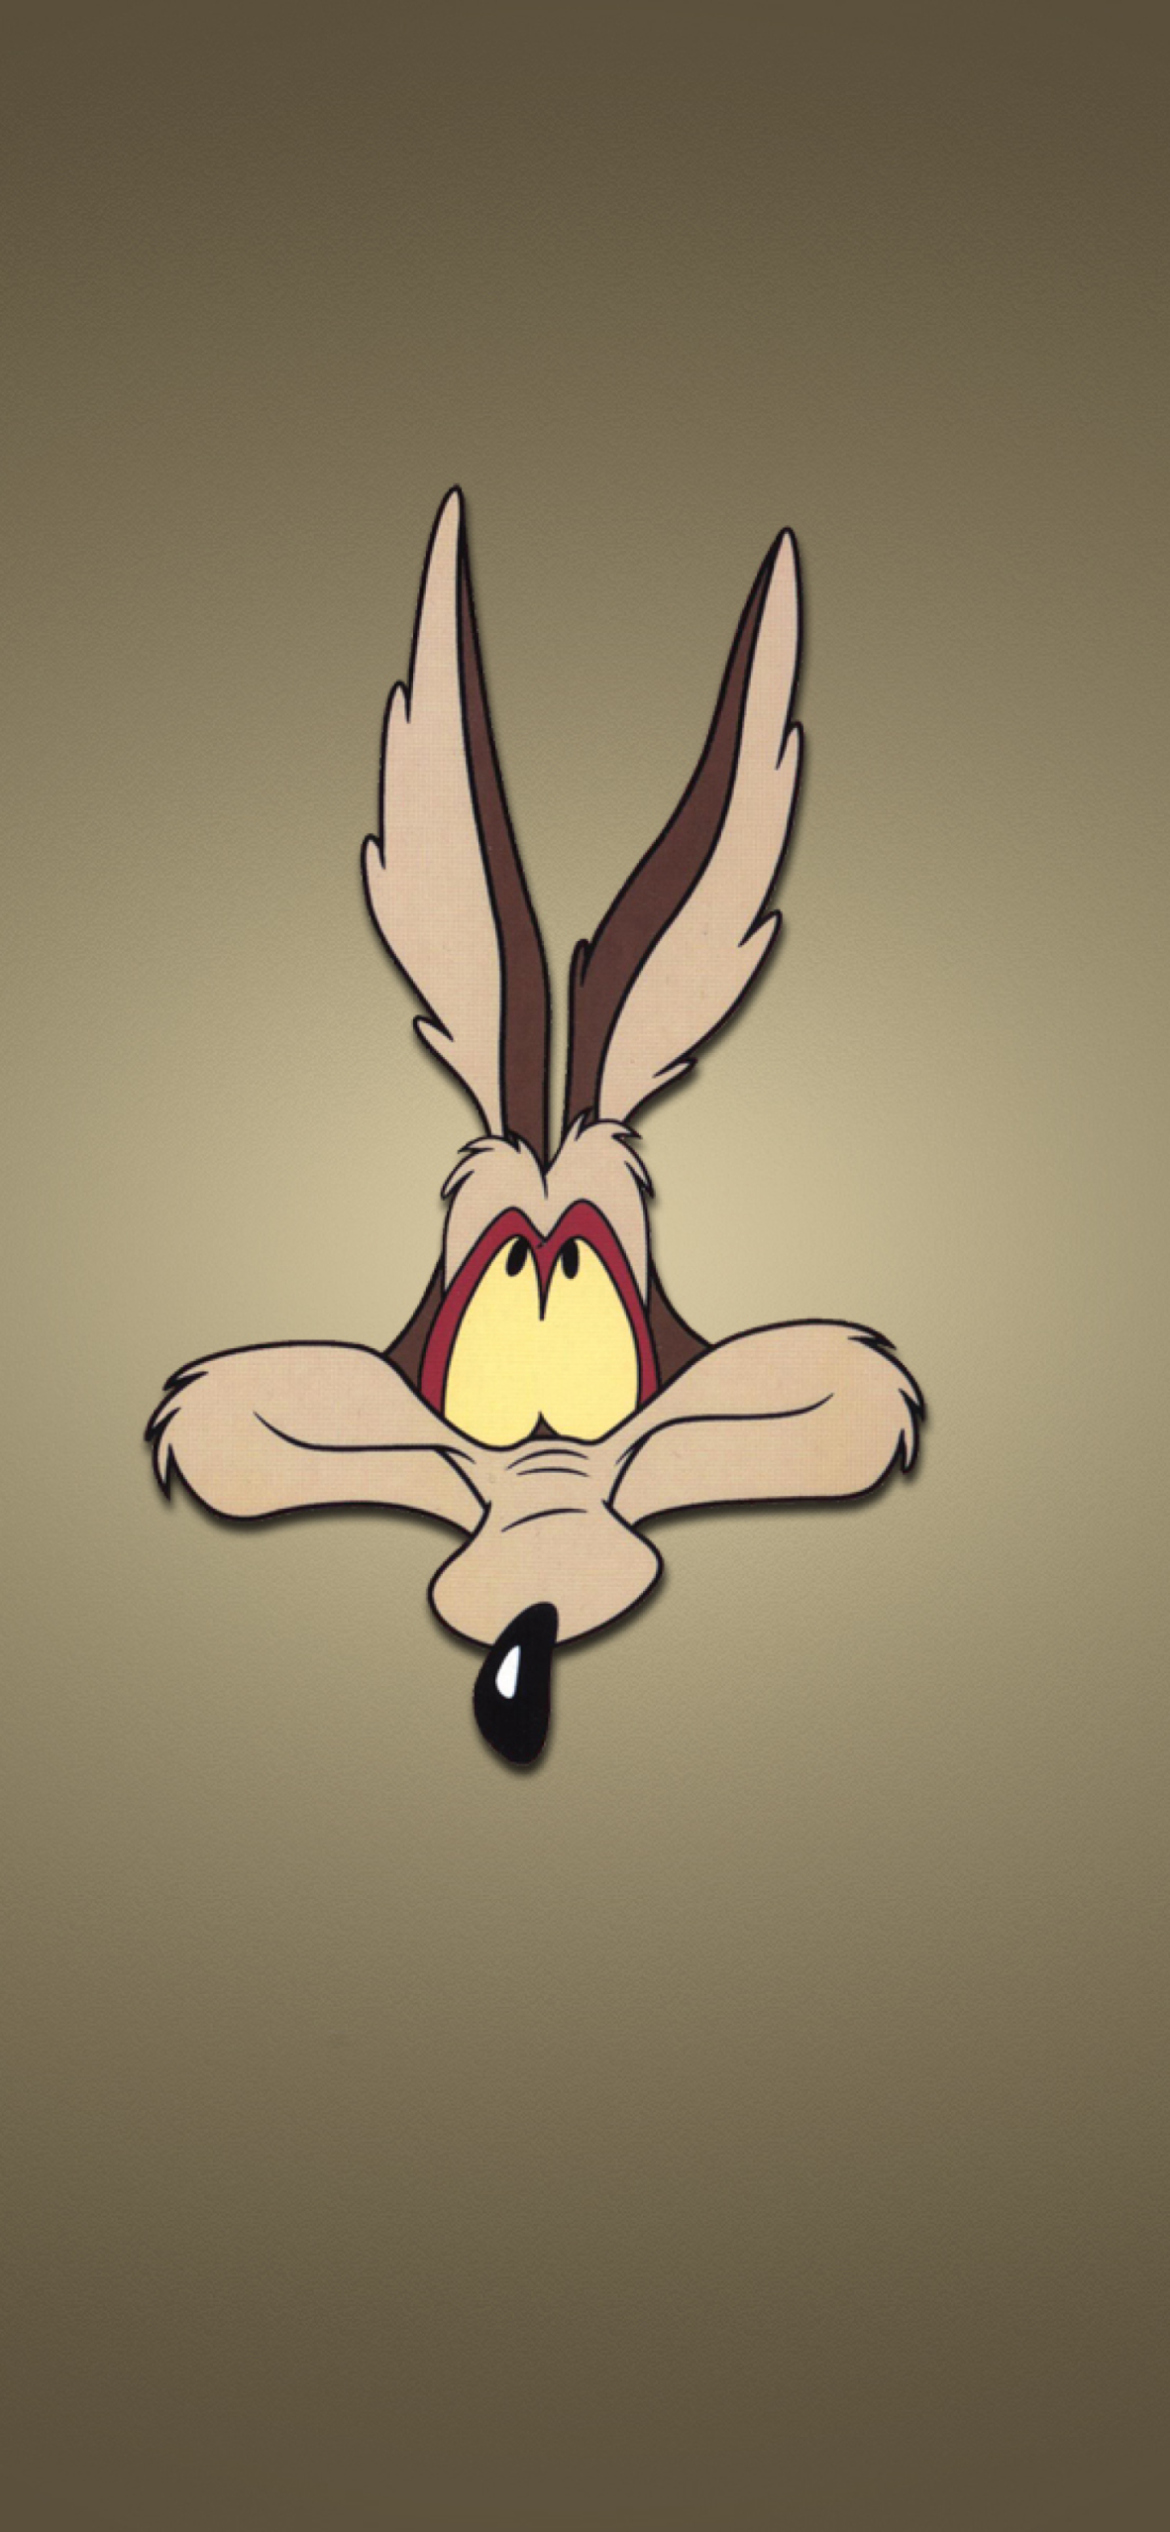 Looney Tunes Wile E. Coyote wallpaper 1170x2532